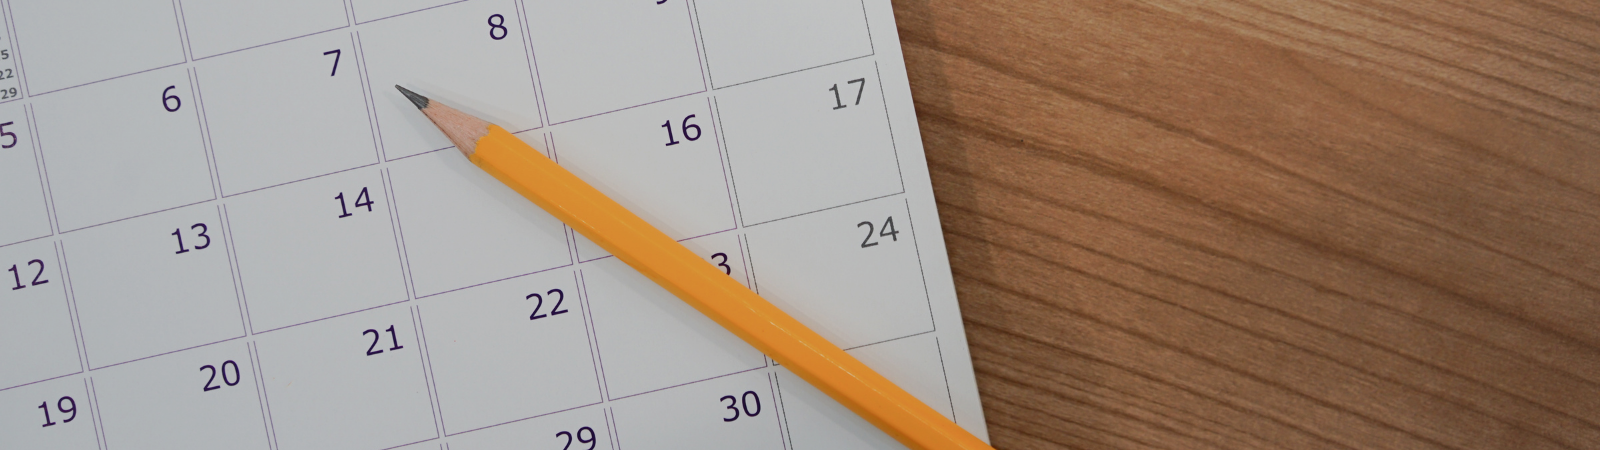 calendar and a pencil on a wooden desk